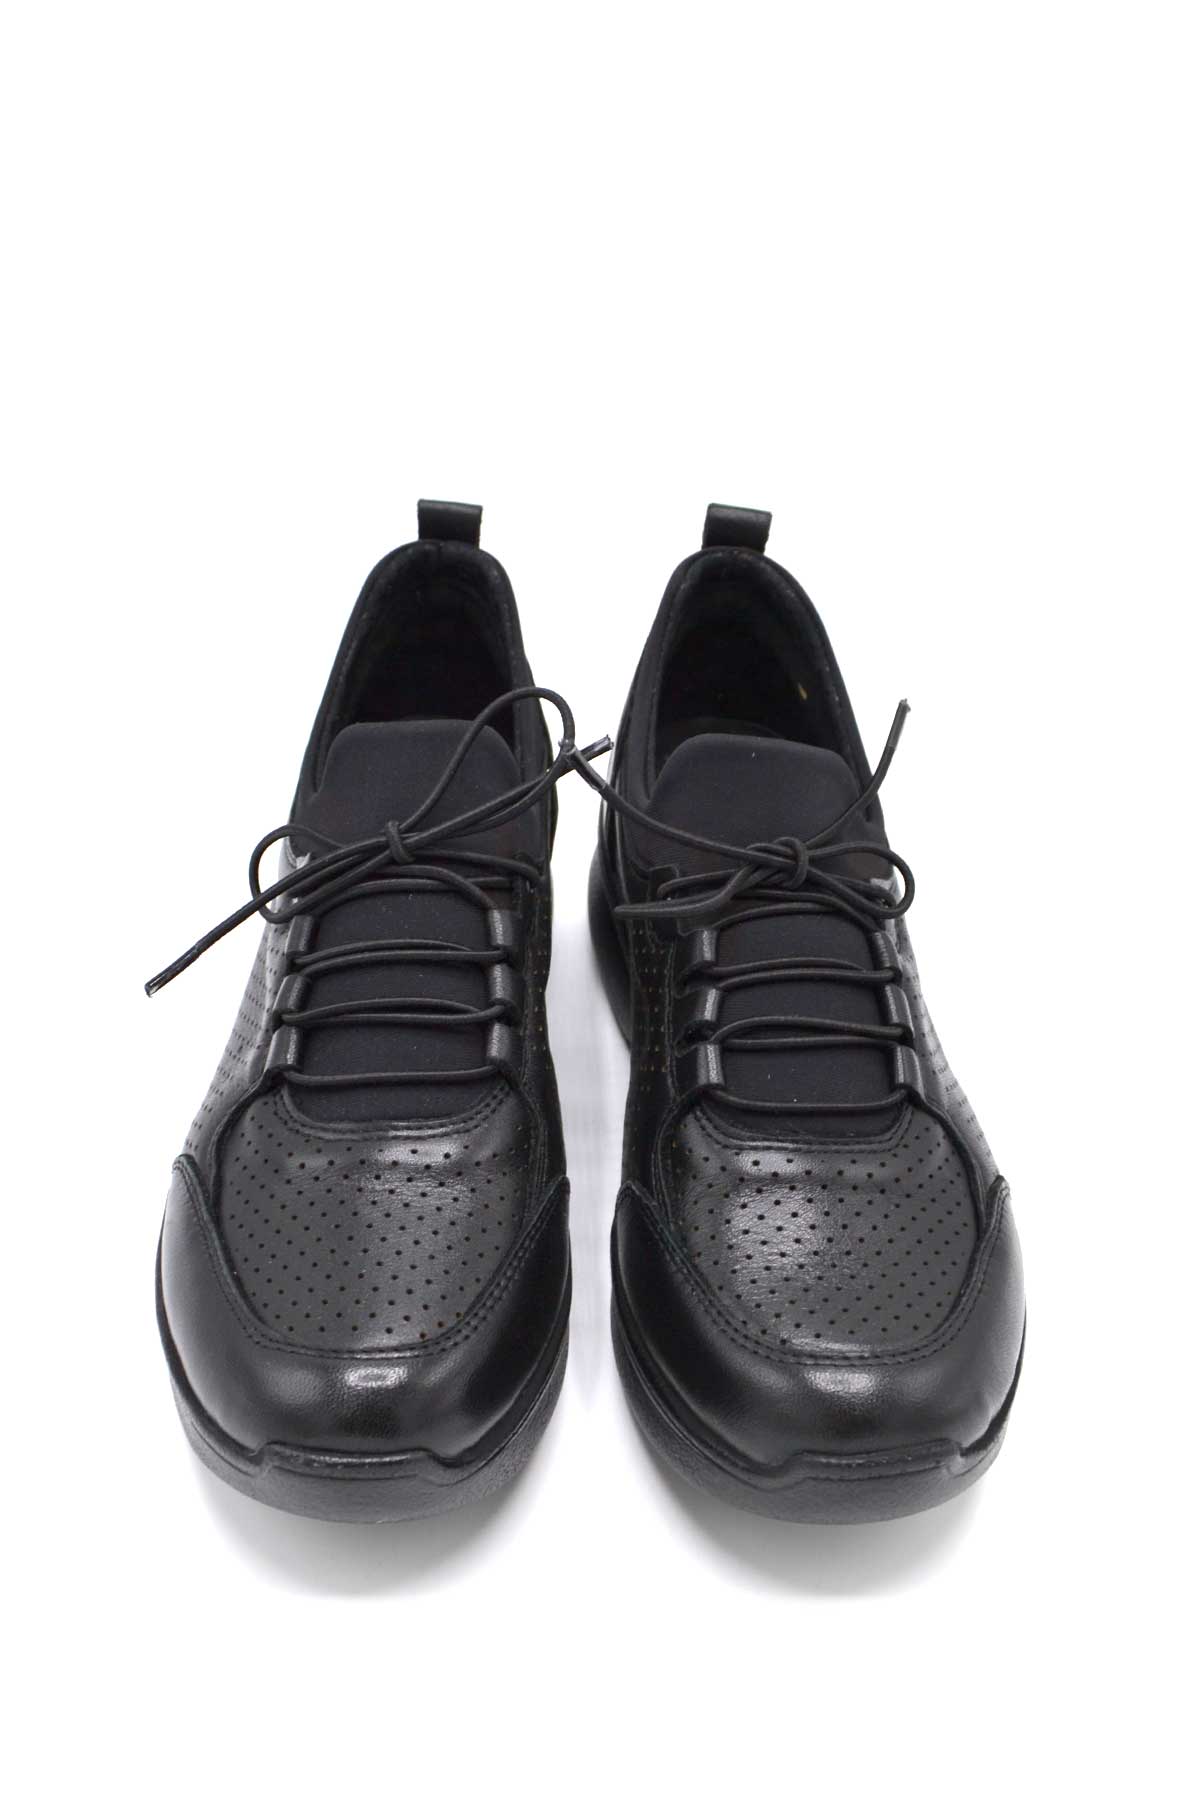 Kadın Airflow Deri Ayakkabı Siyah 1901707Y - Thumbnail